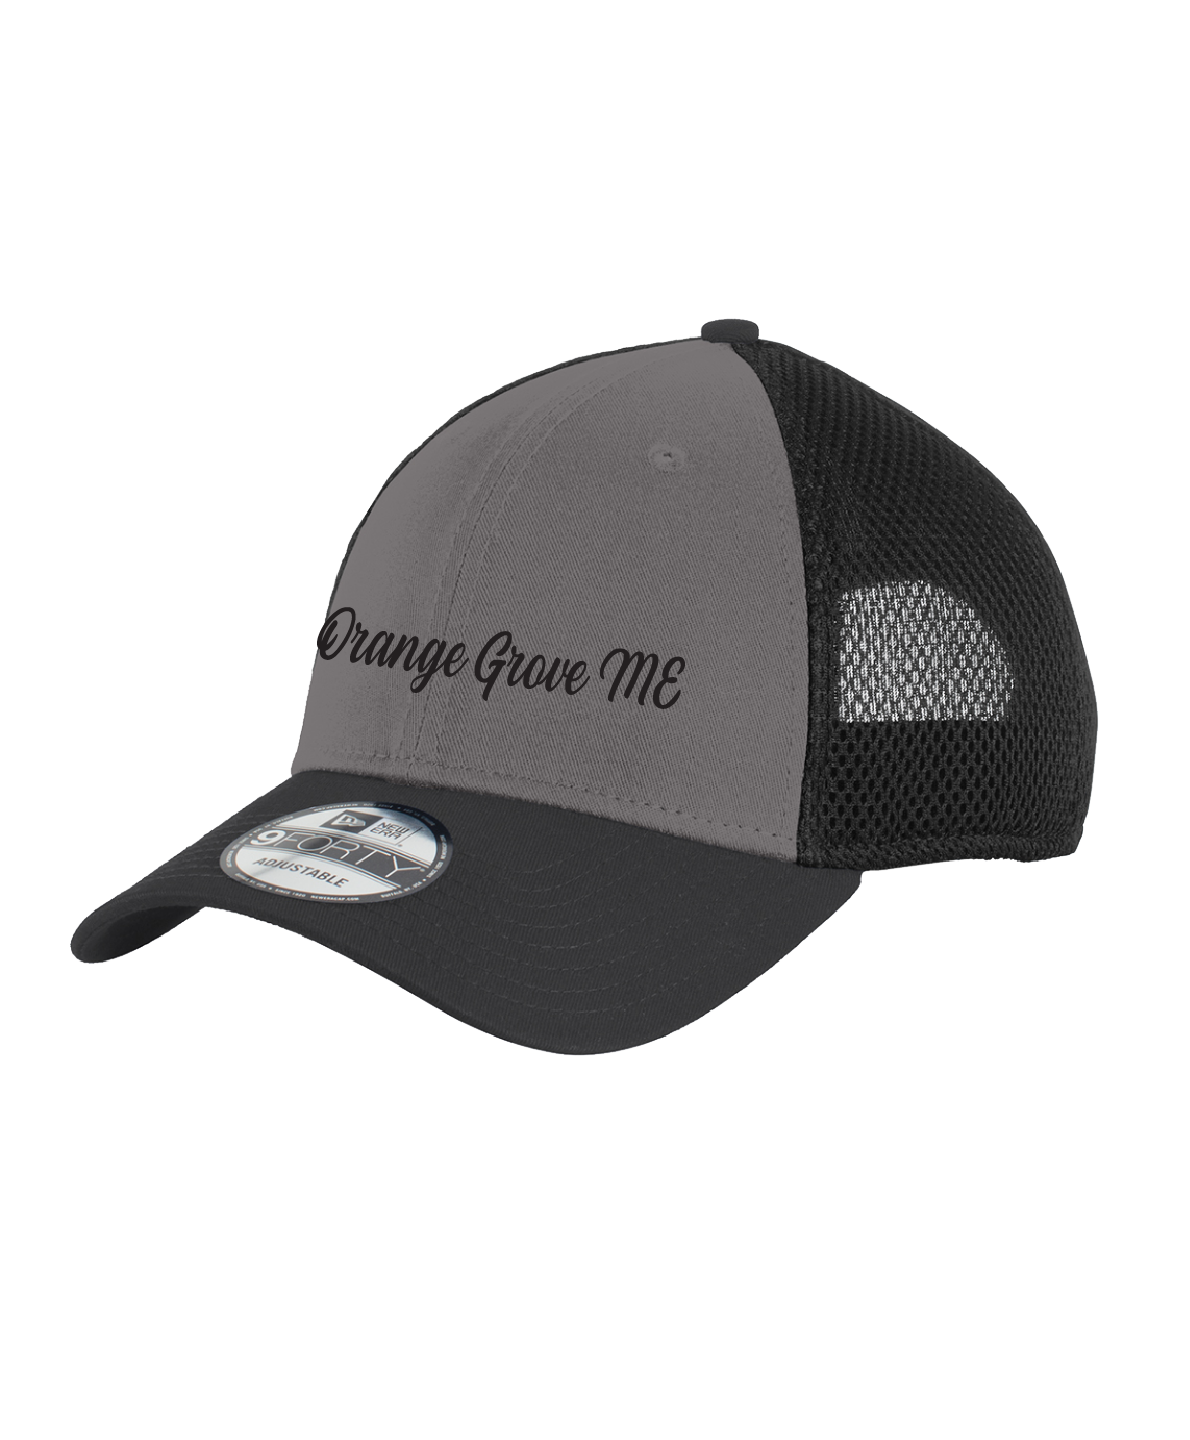 Orange Grove ME - New Era® - Snapback Contrast Front Mesh Cap